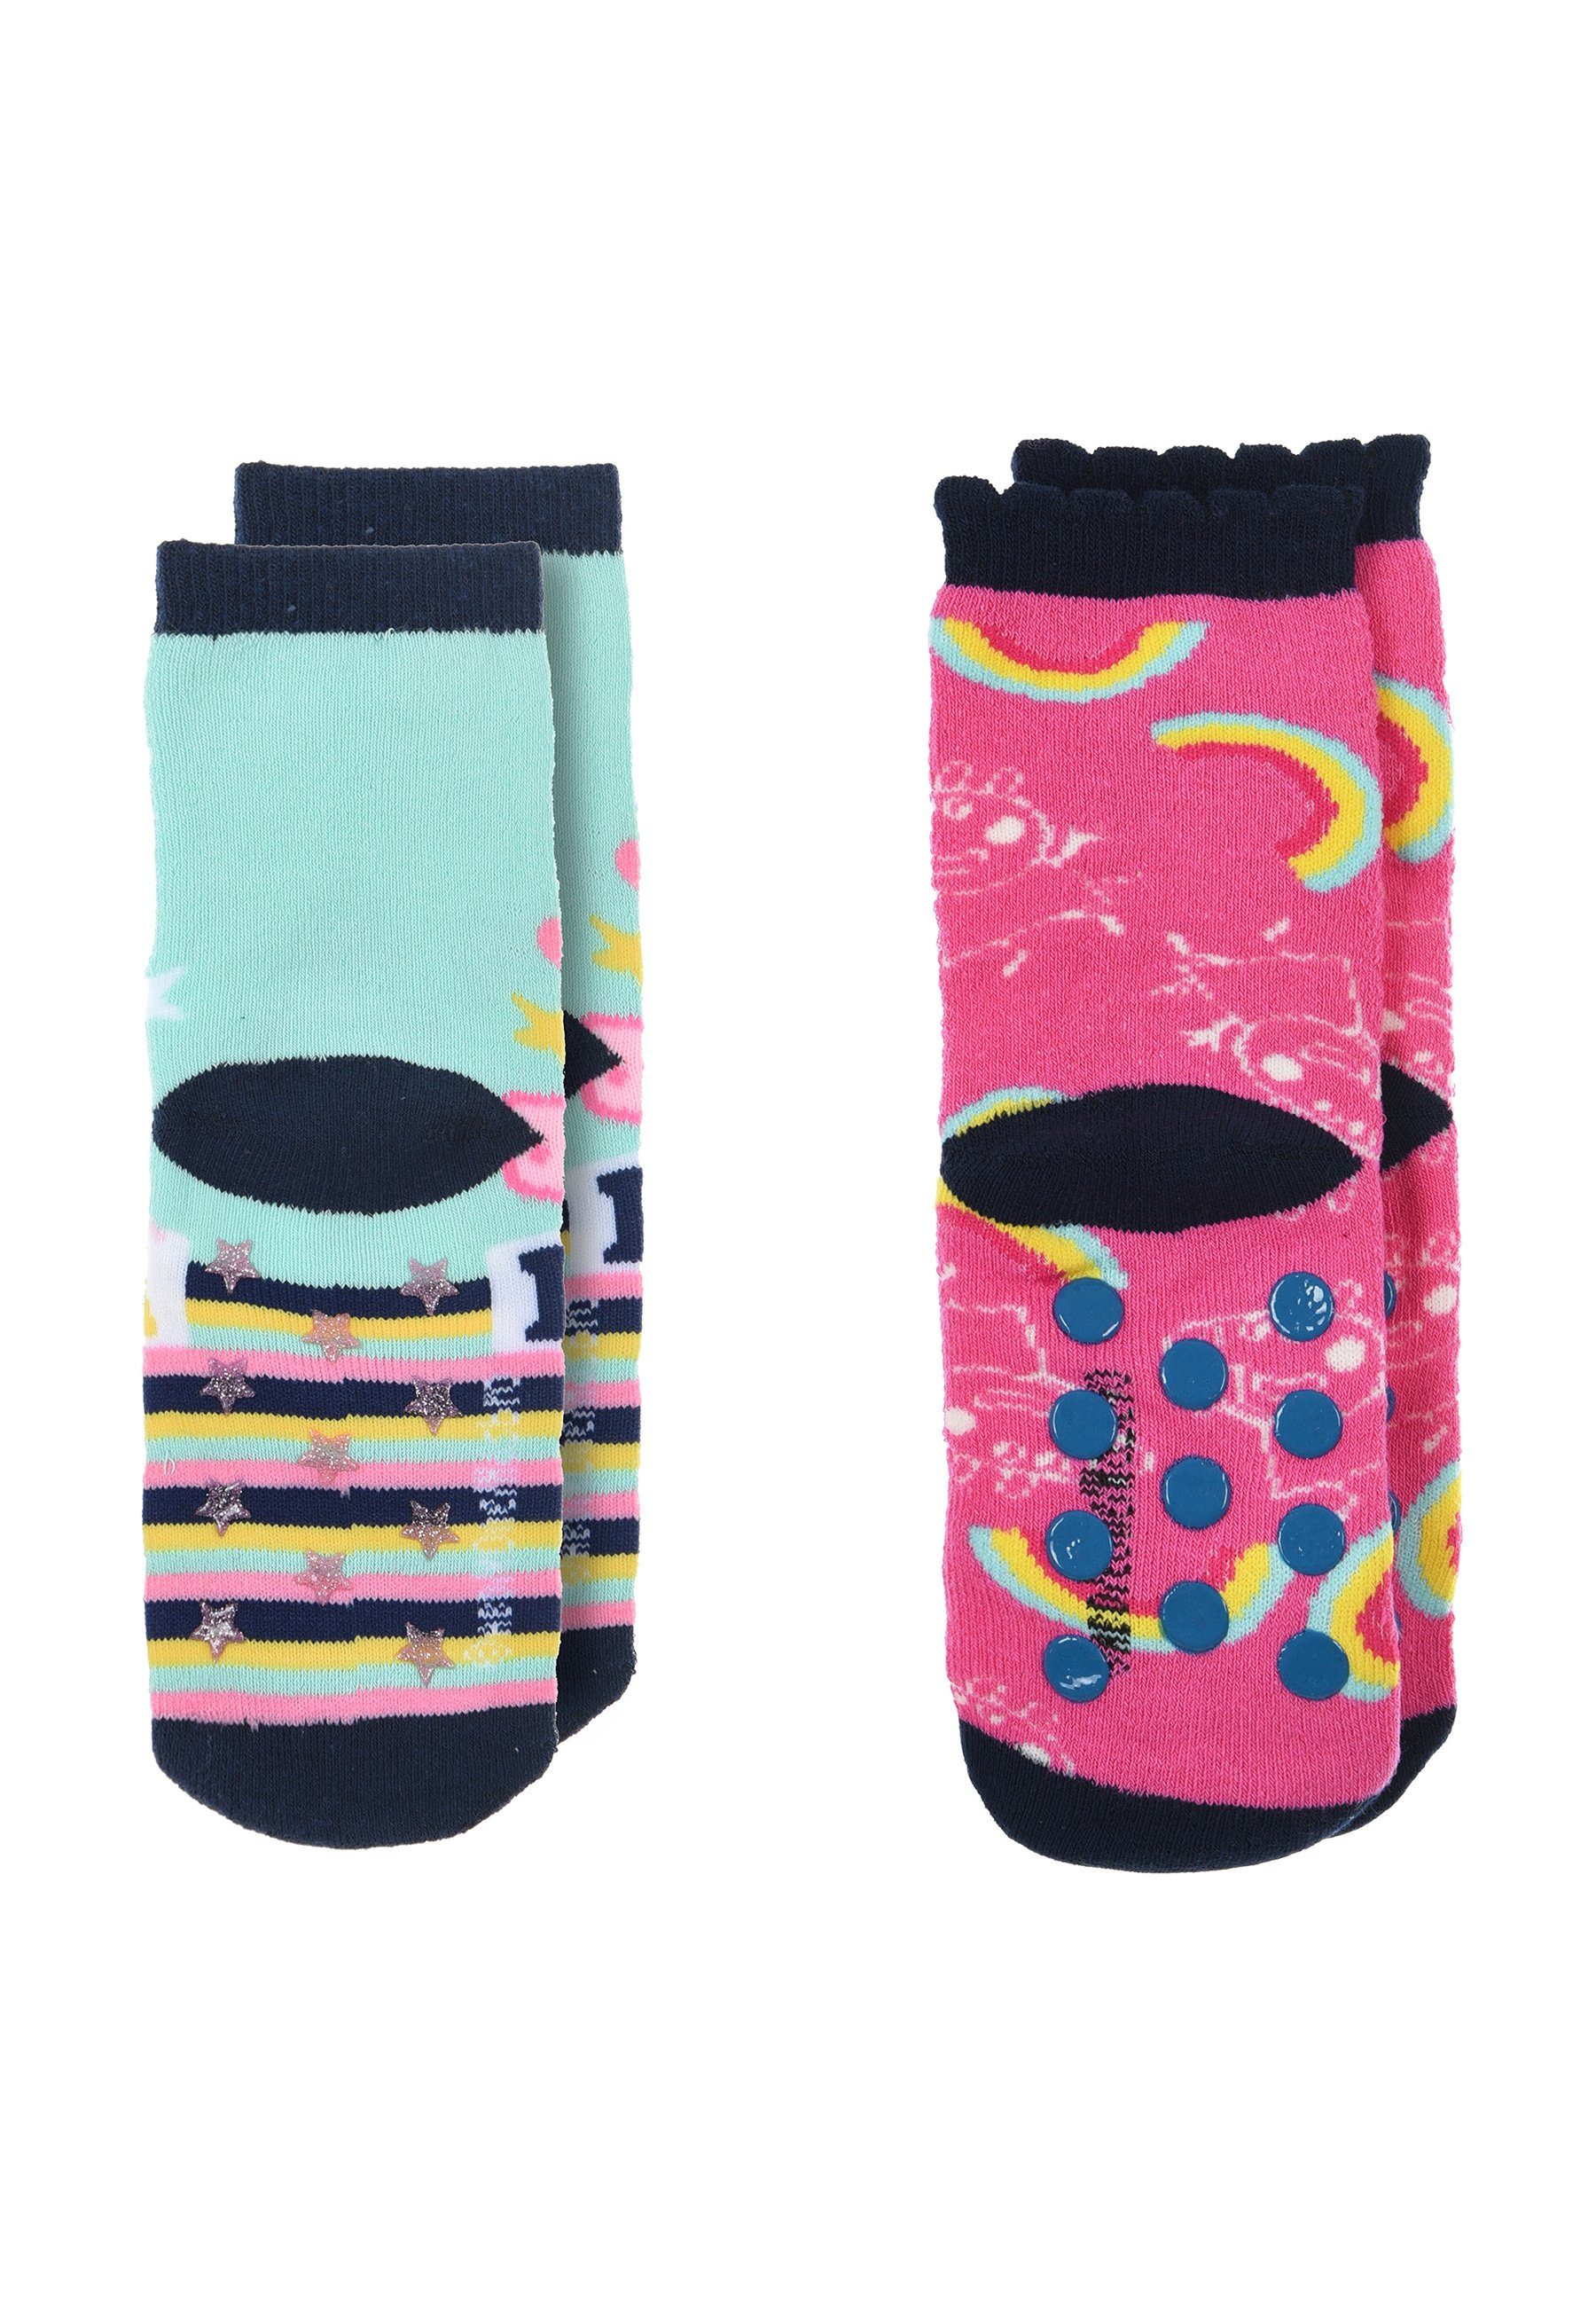 Pig Mädchen Peppa anti-rutsch Noppen Socken (2-Paar) ABS-Socken mit Strümpfe Wutz Peppa